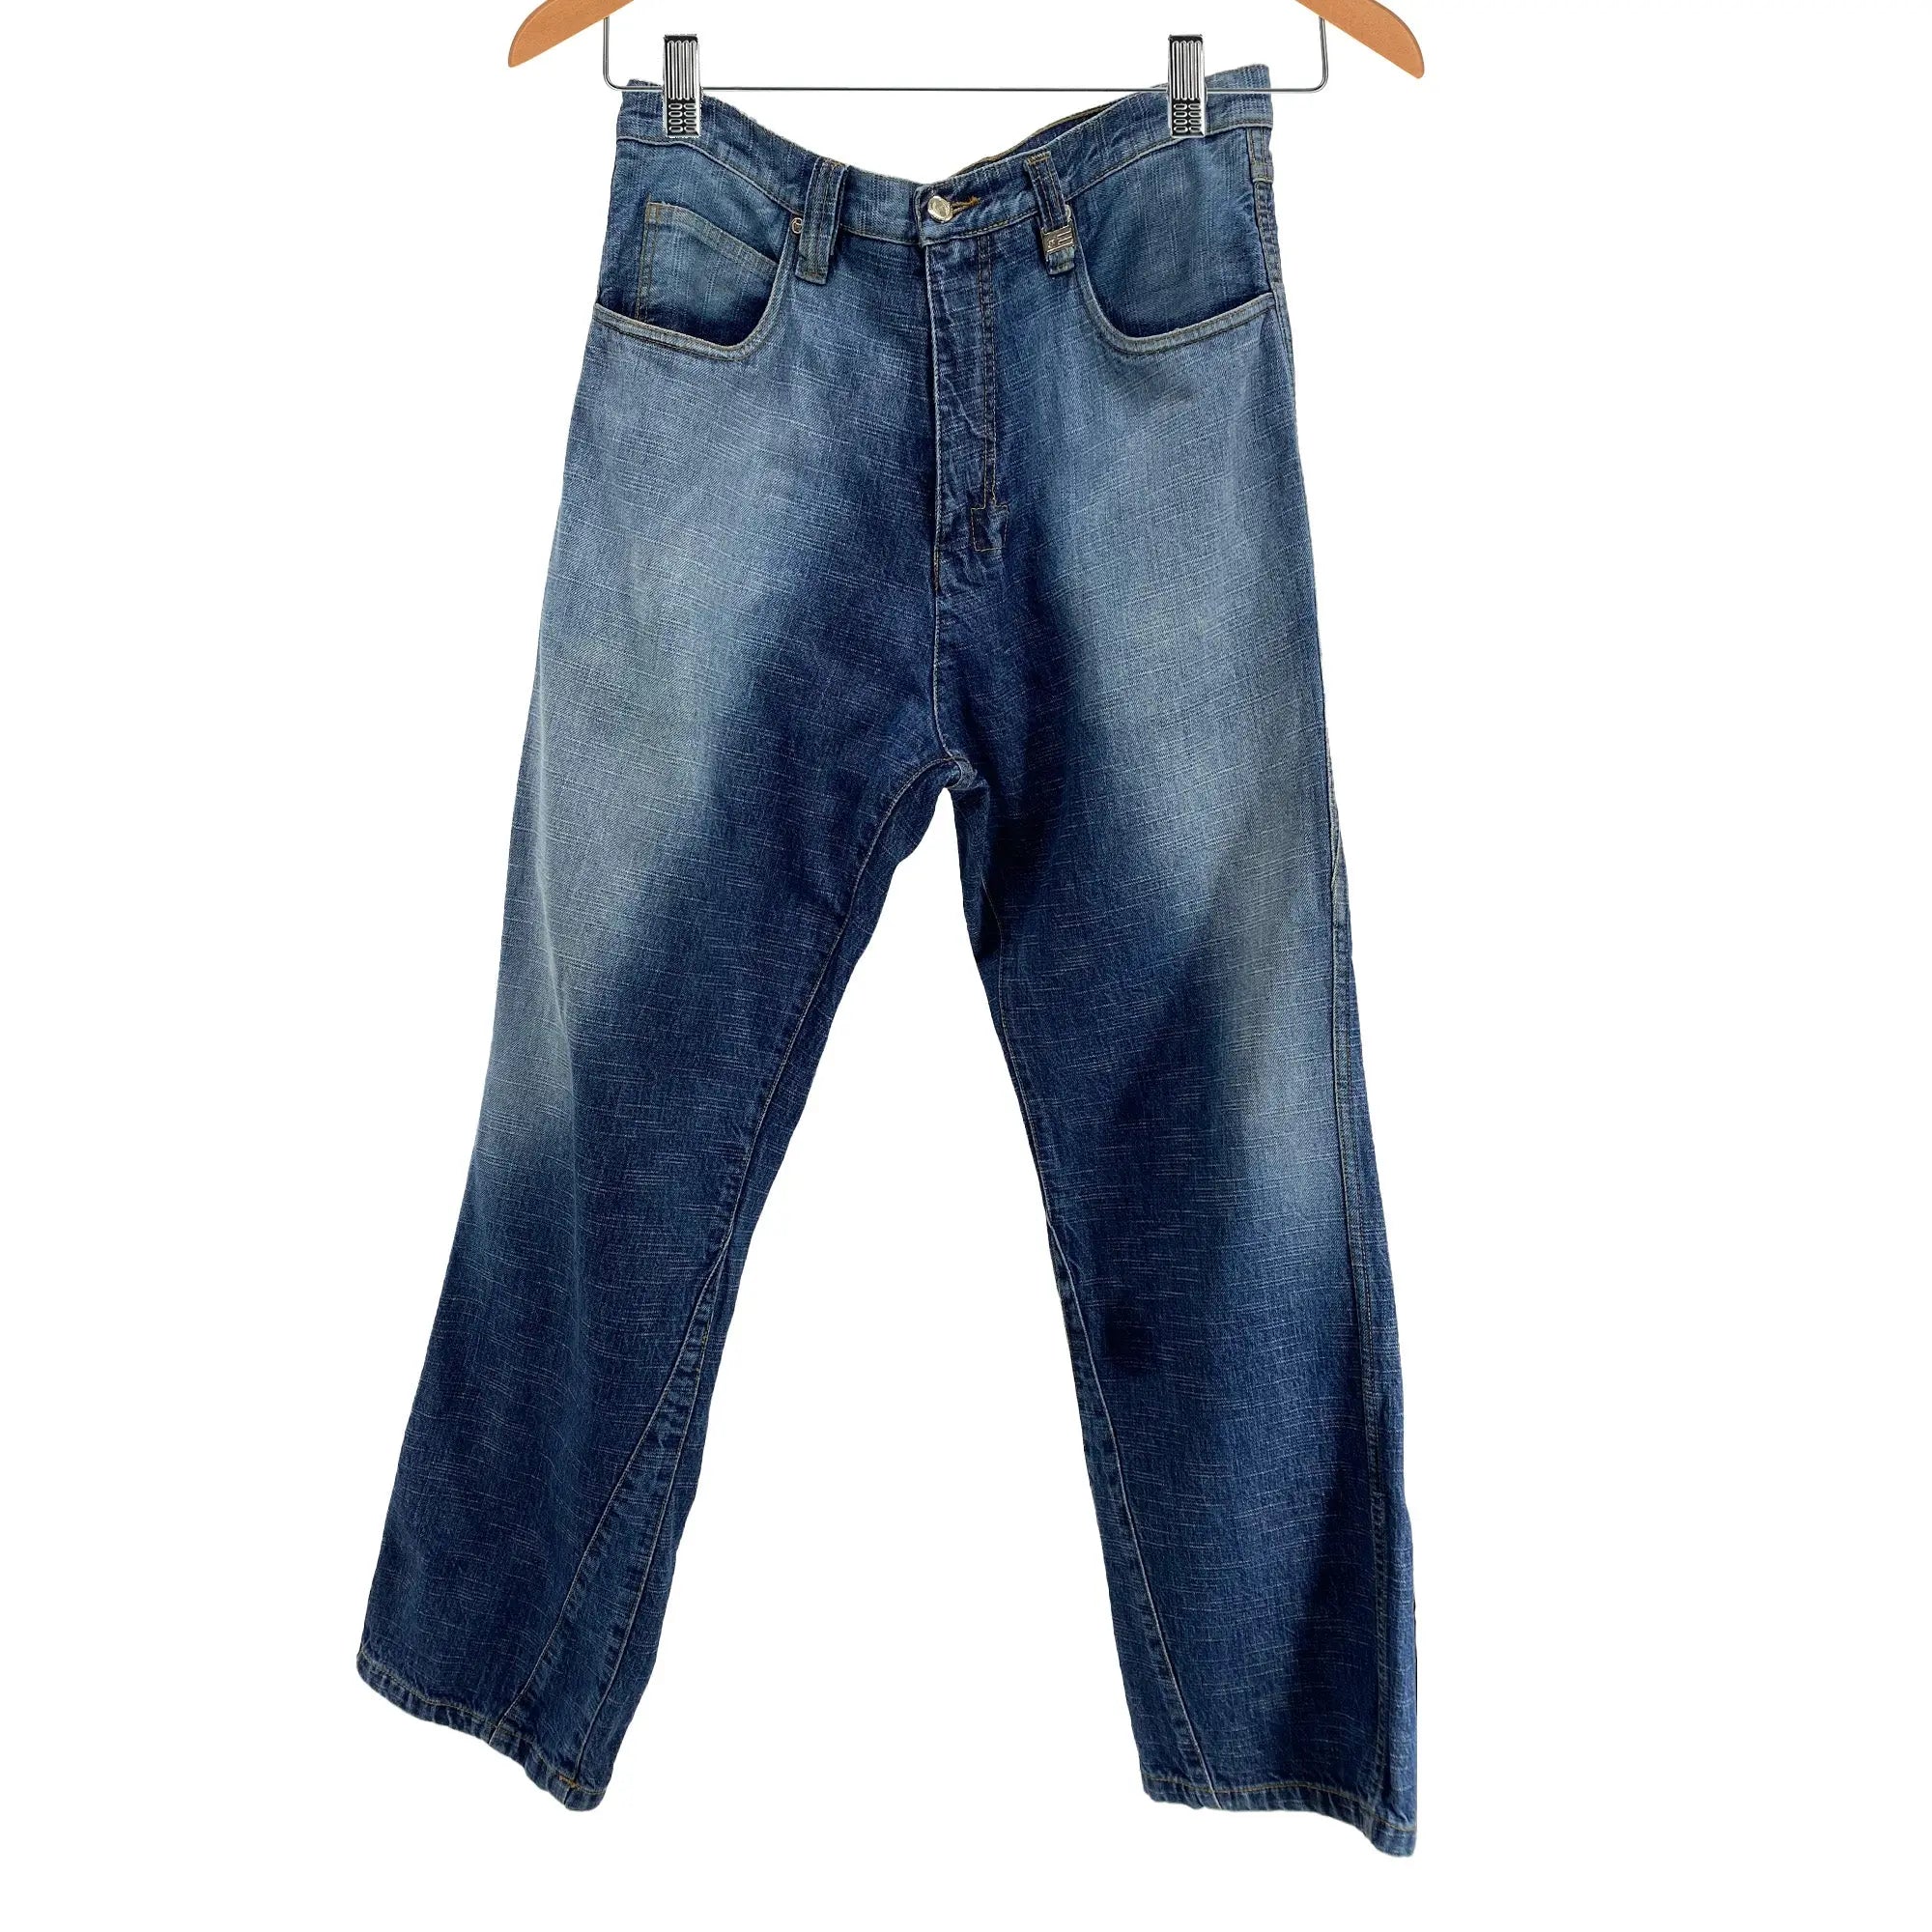 Phat Farm Two-tone Sandblasted Jeans - Men's 34x33 Great Lakes Reclaimed Denim